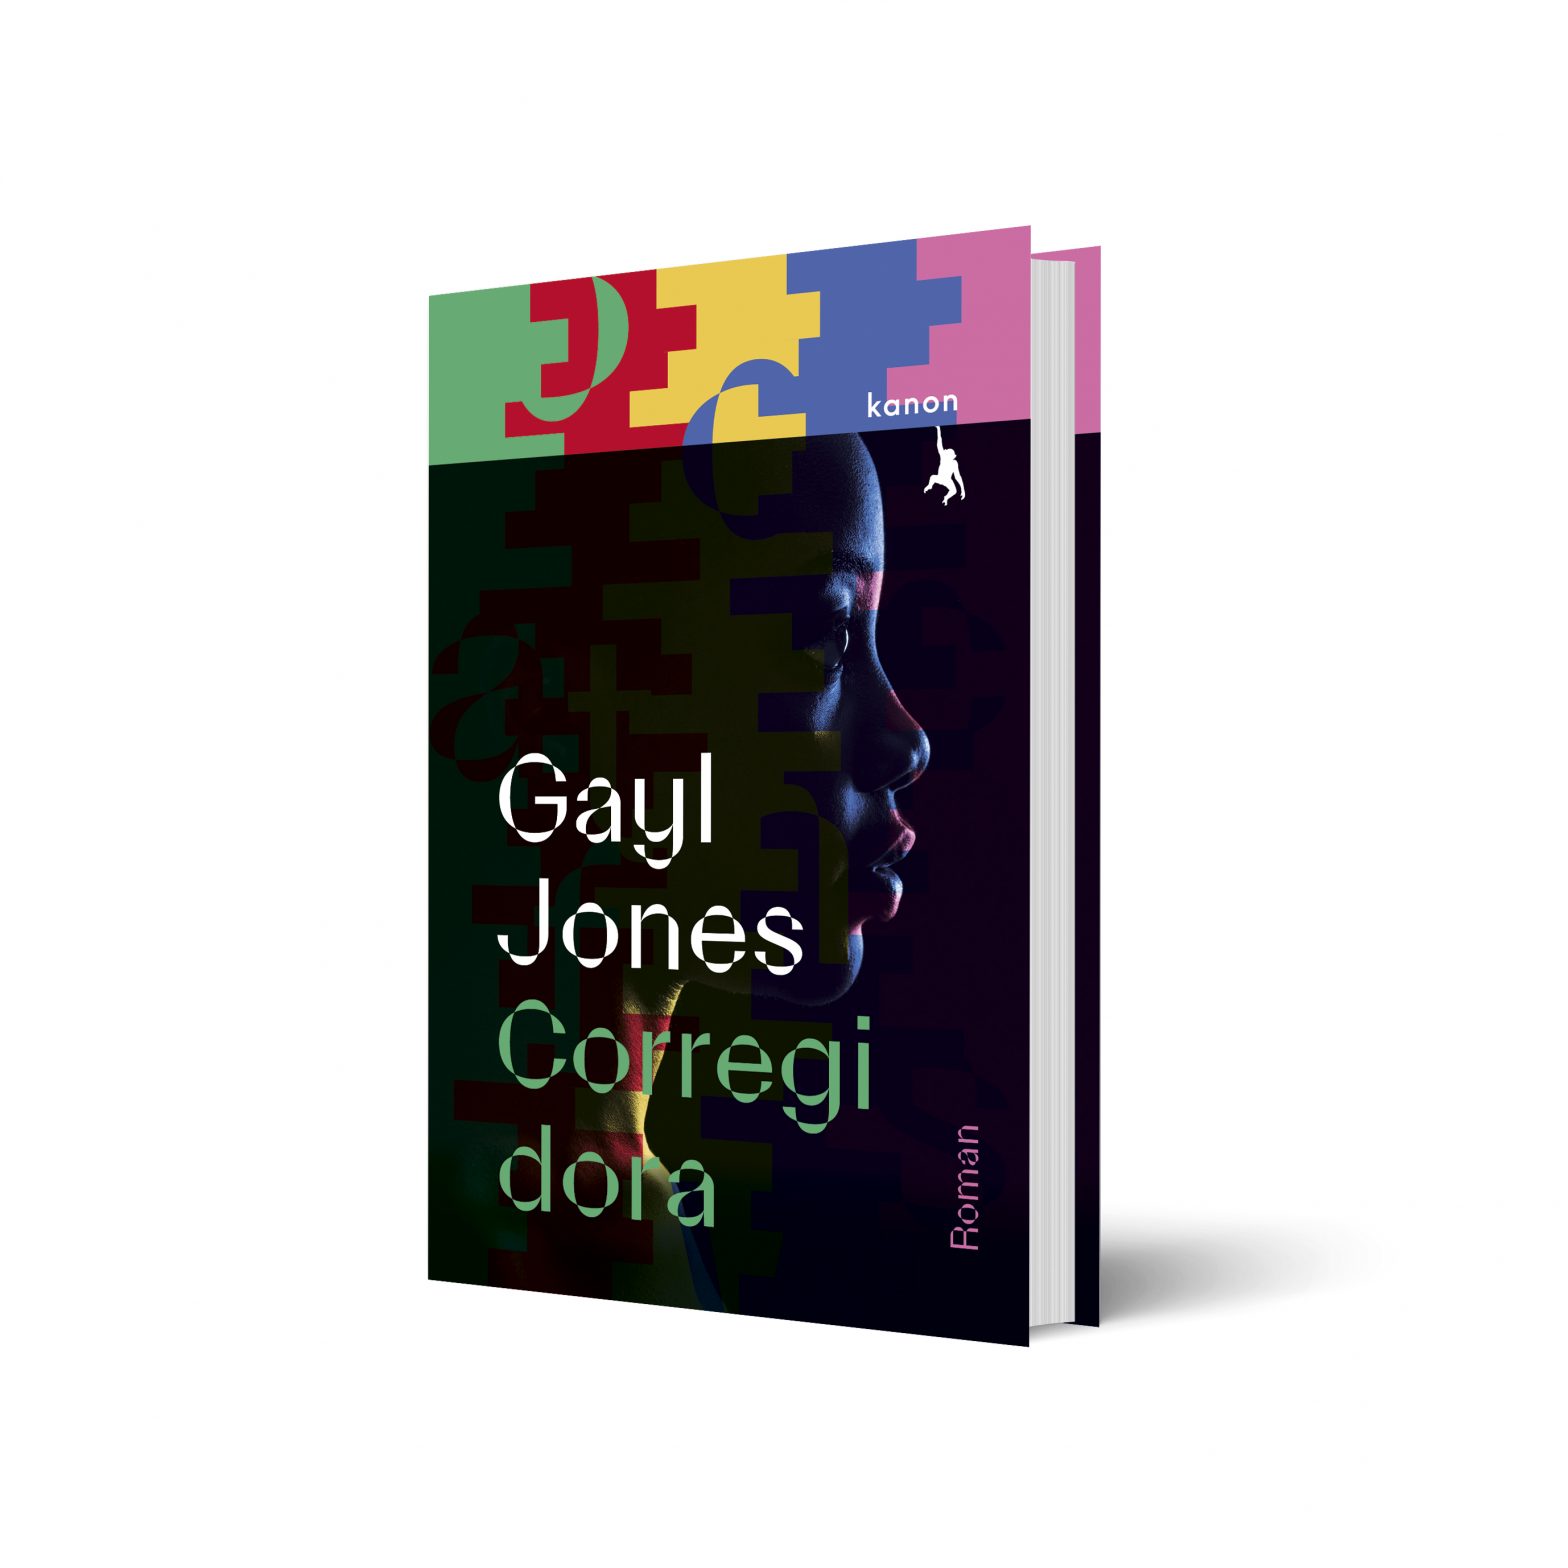 Gayl Jones - Corregidora Cover